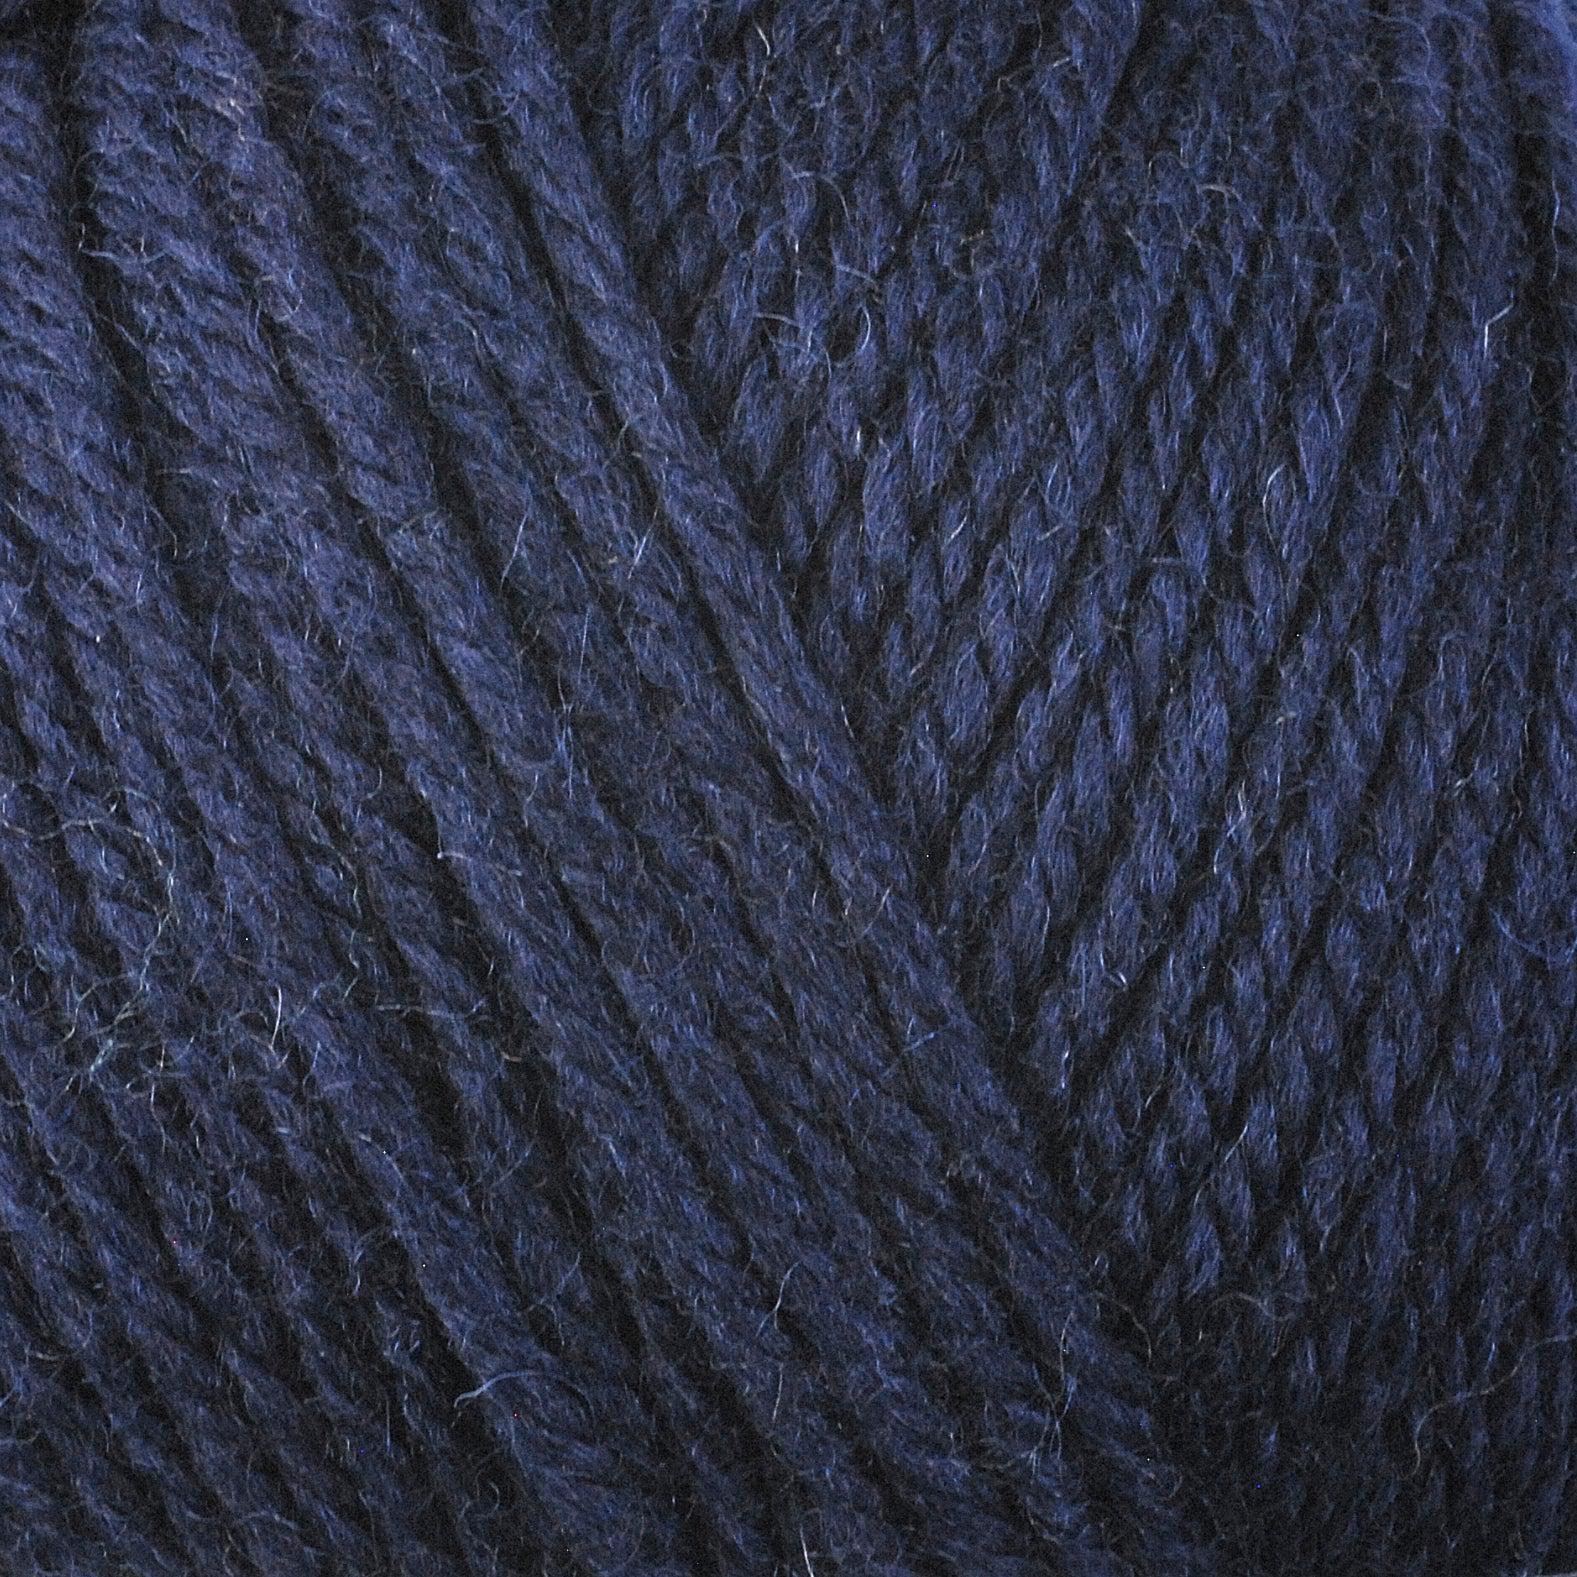 Detail of Berroco Ultra Wool Chunky Maritime 4365 a heathered navy blue.